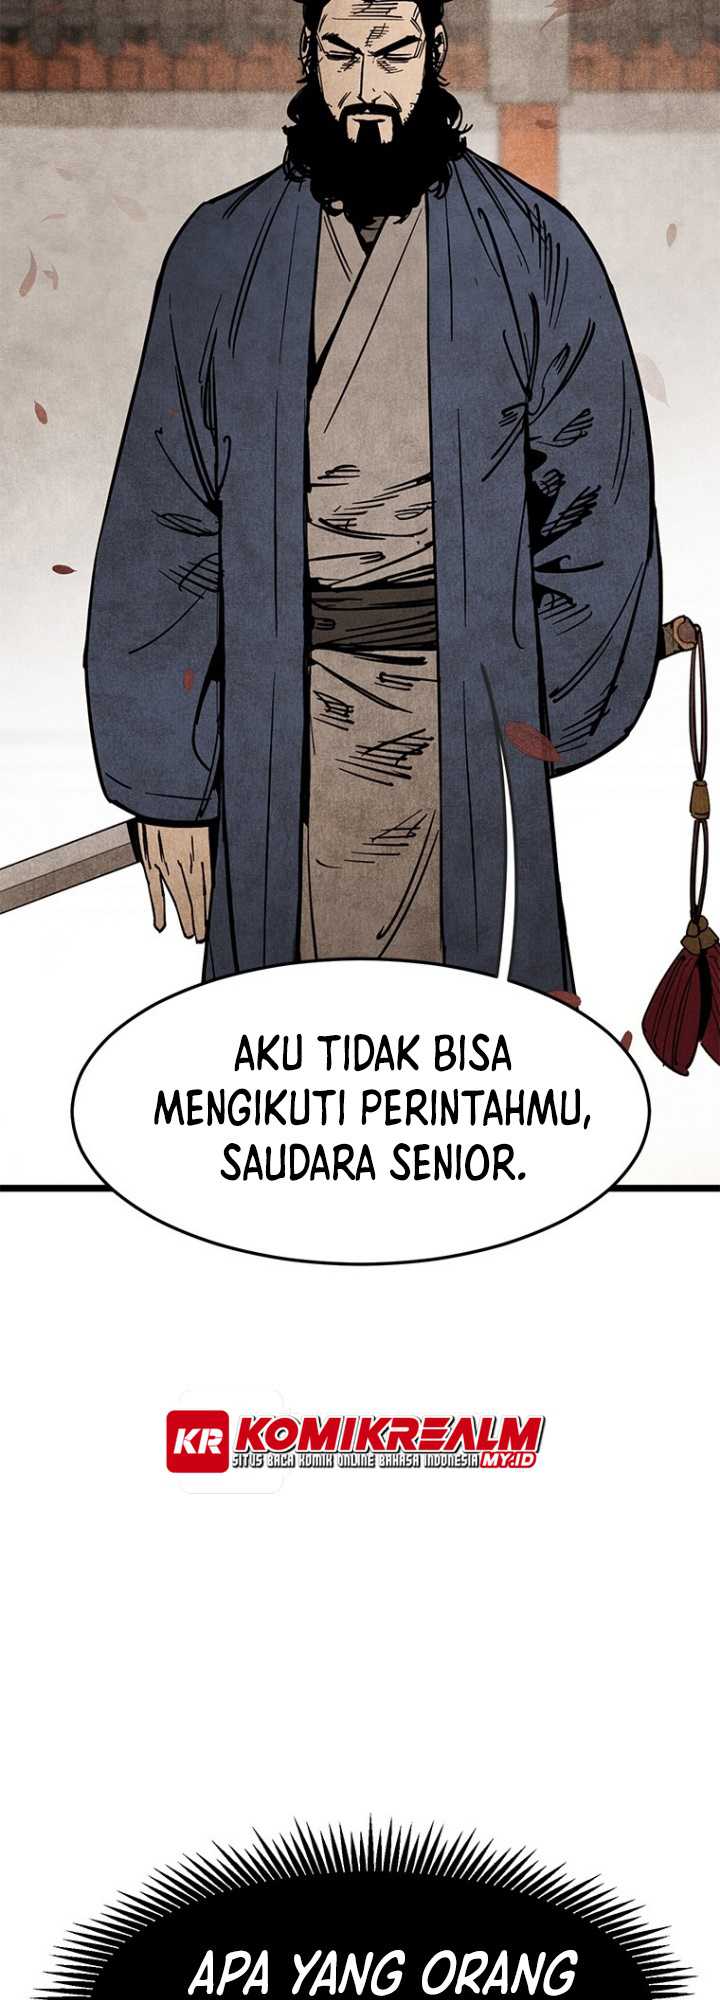 Rural Edgeless Sword Chapter 01 Bahasa Indonesia